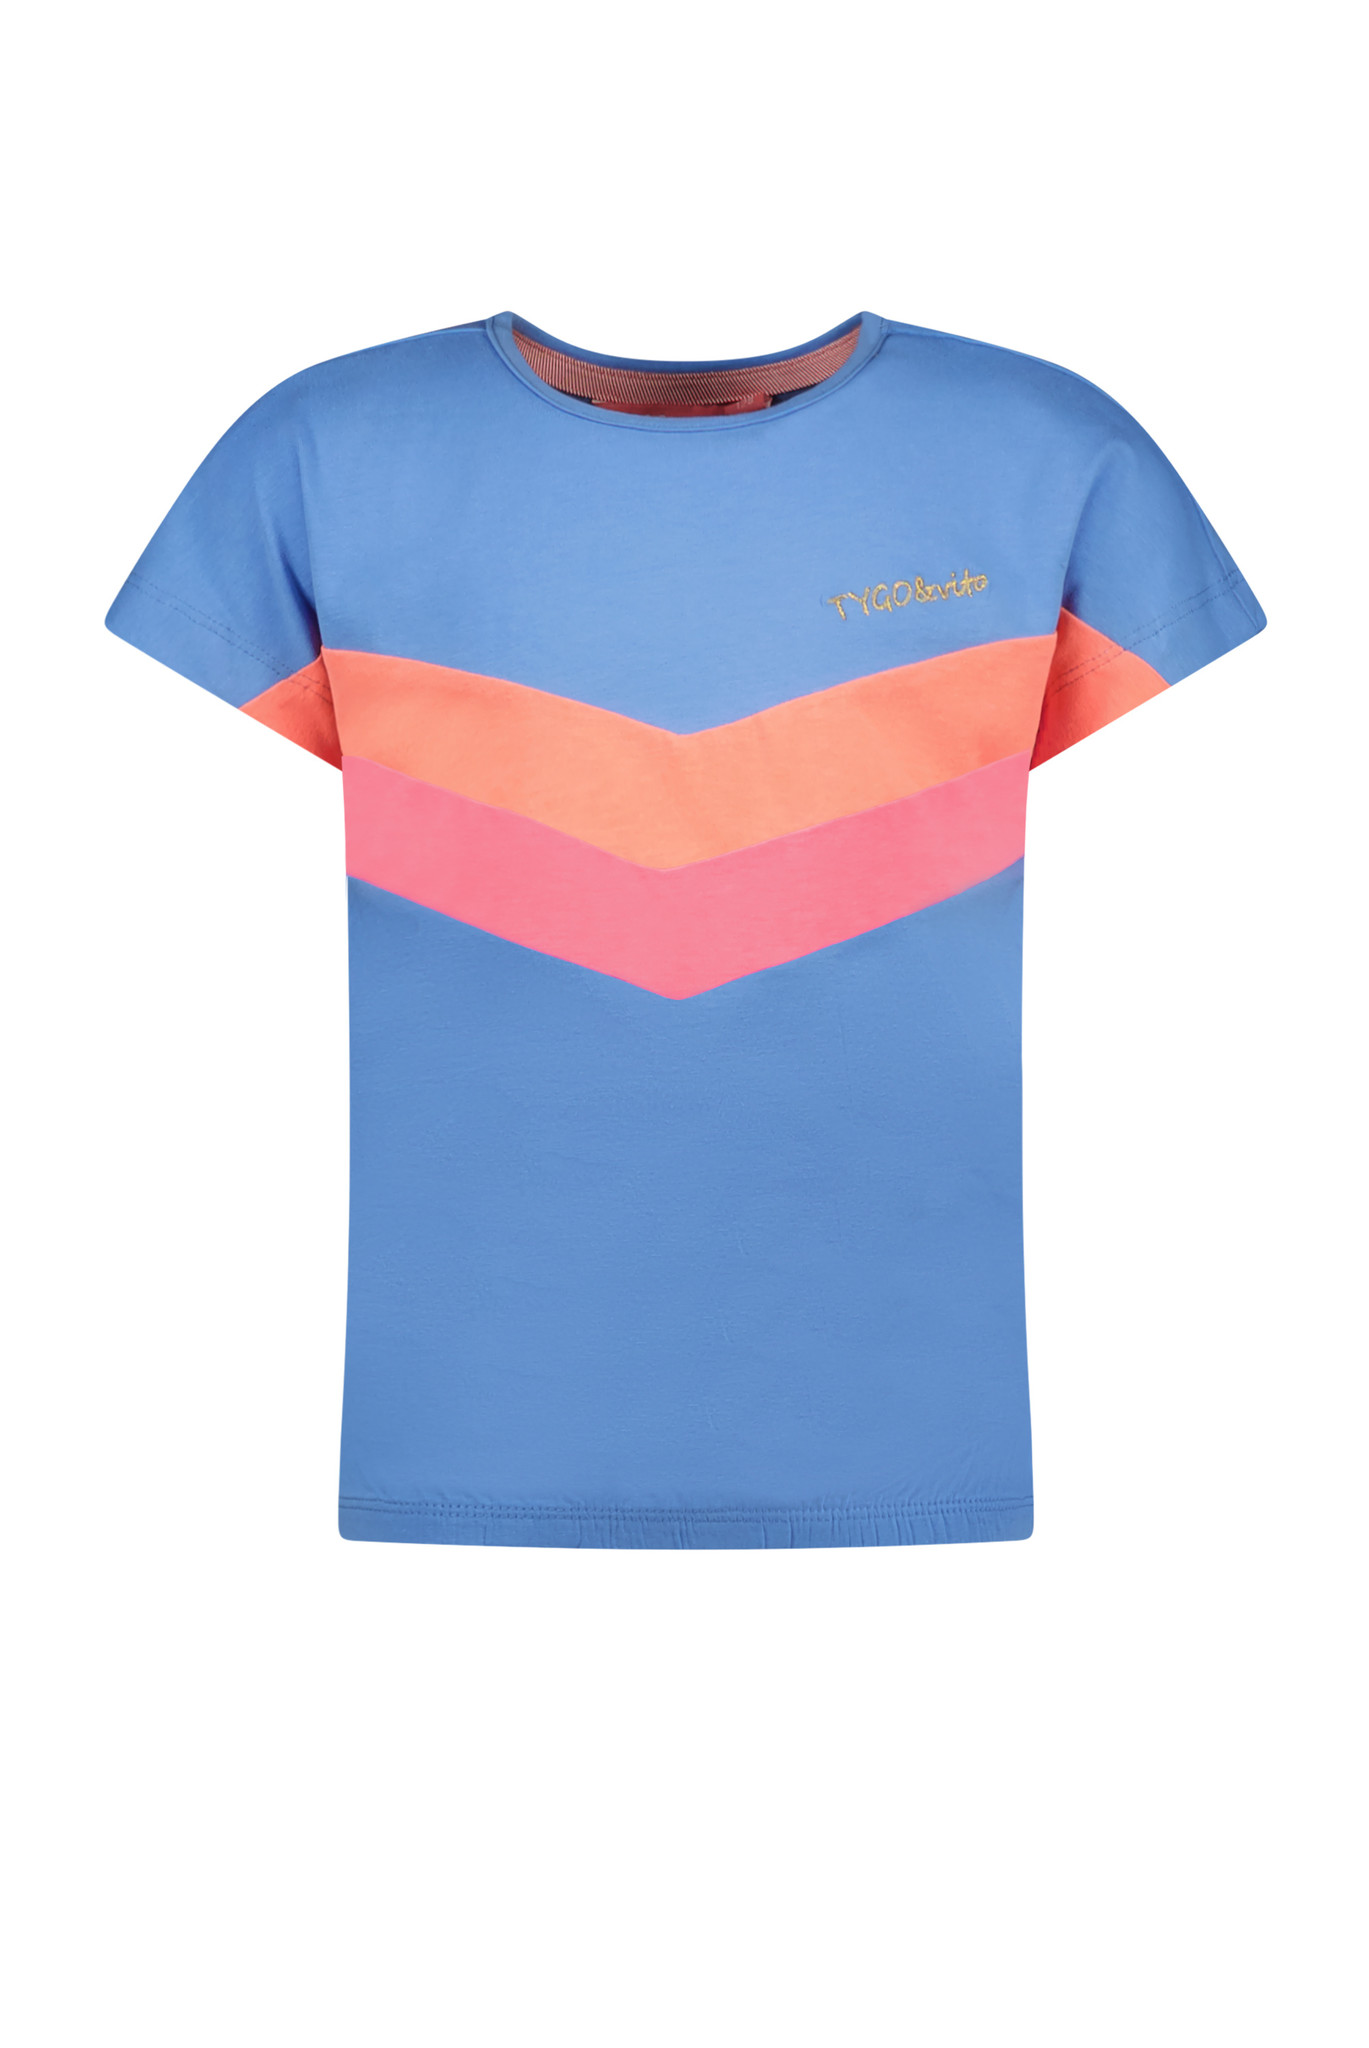 Tygo & Vito Meisjes t-shirt colorblock - Licht blauw